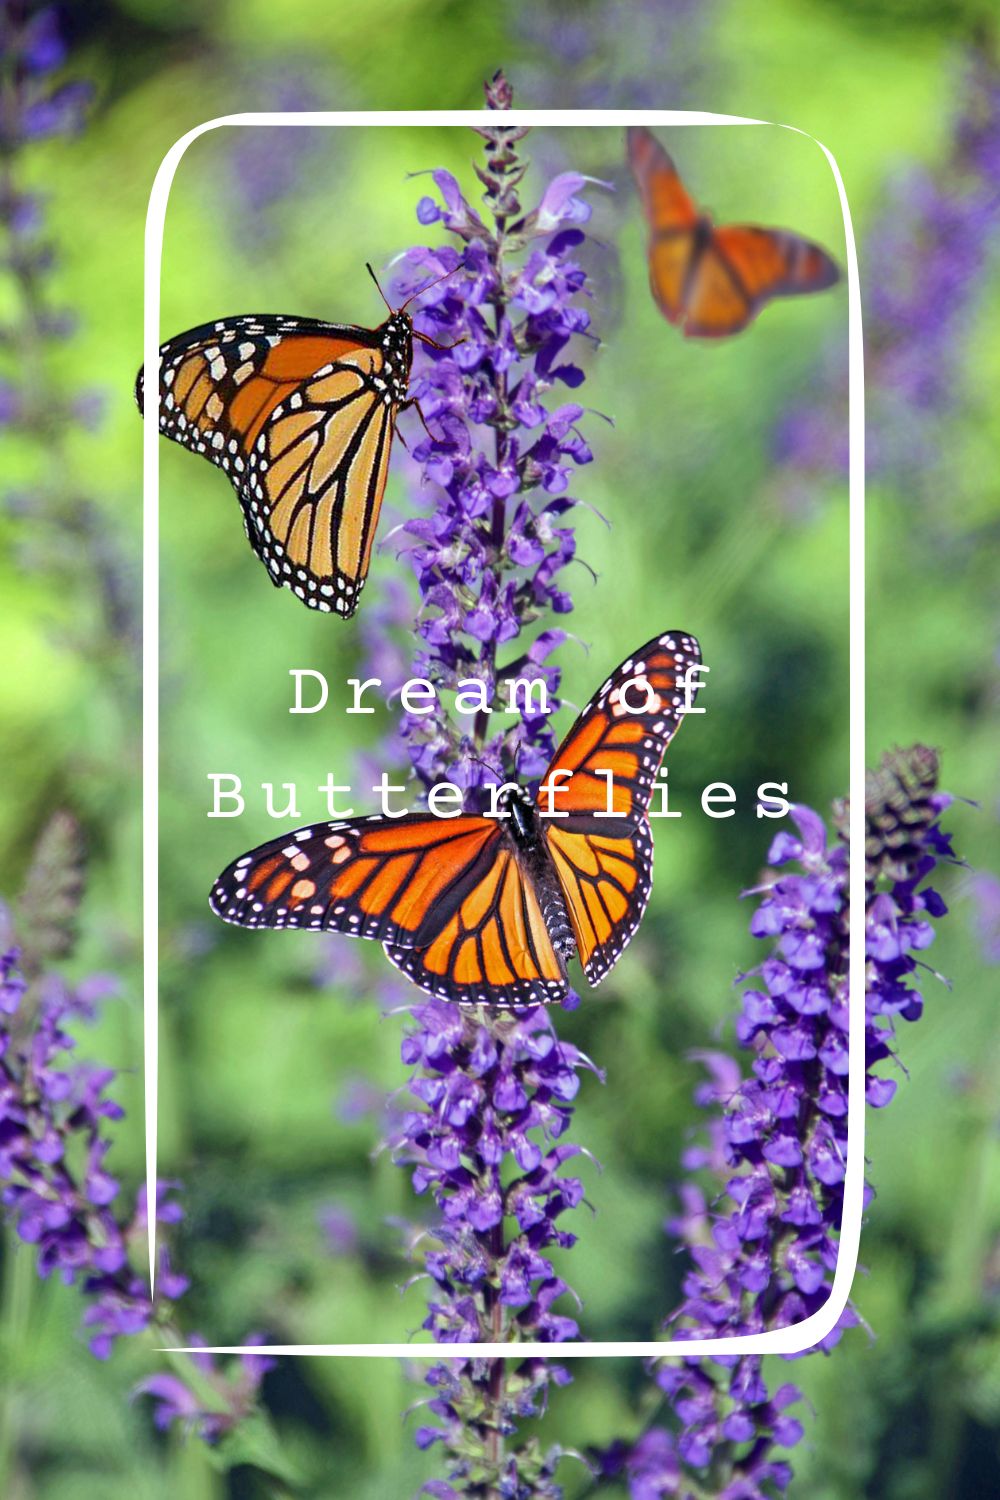 16 Dream of Butterflies Meanings1